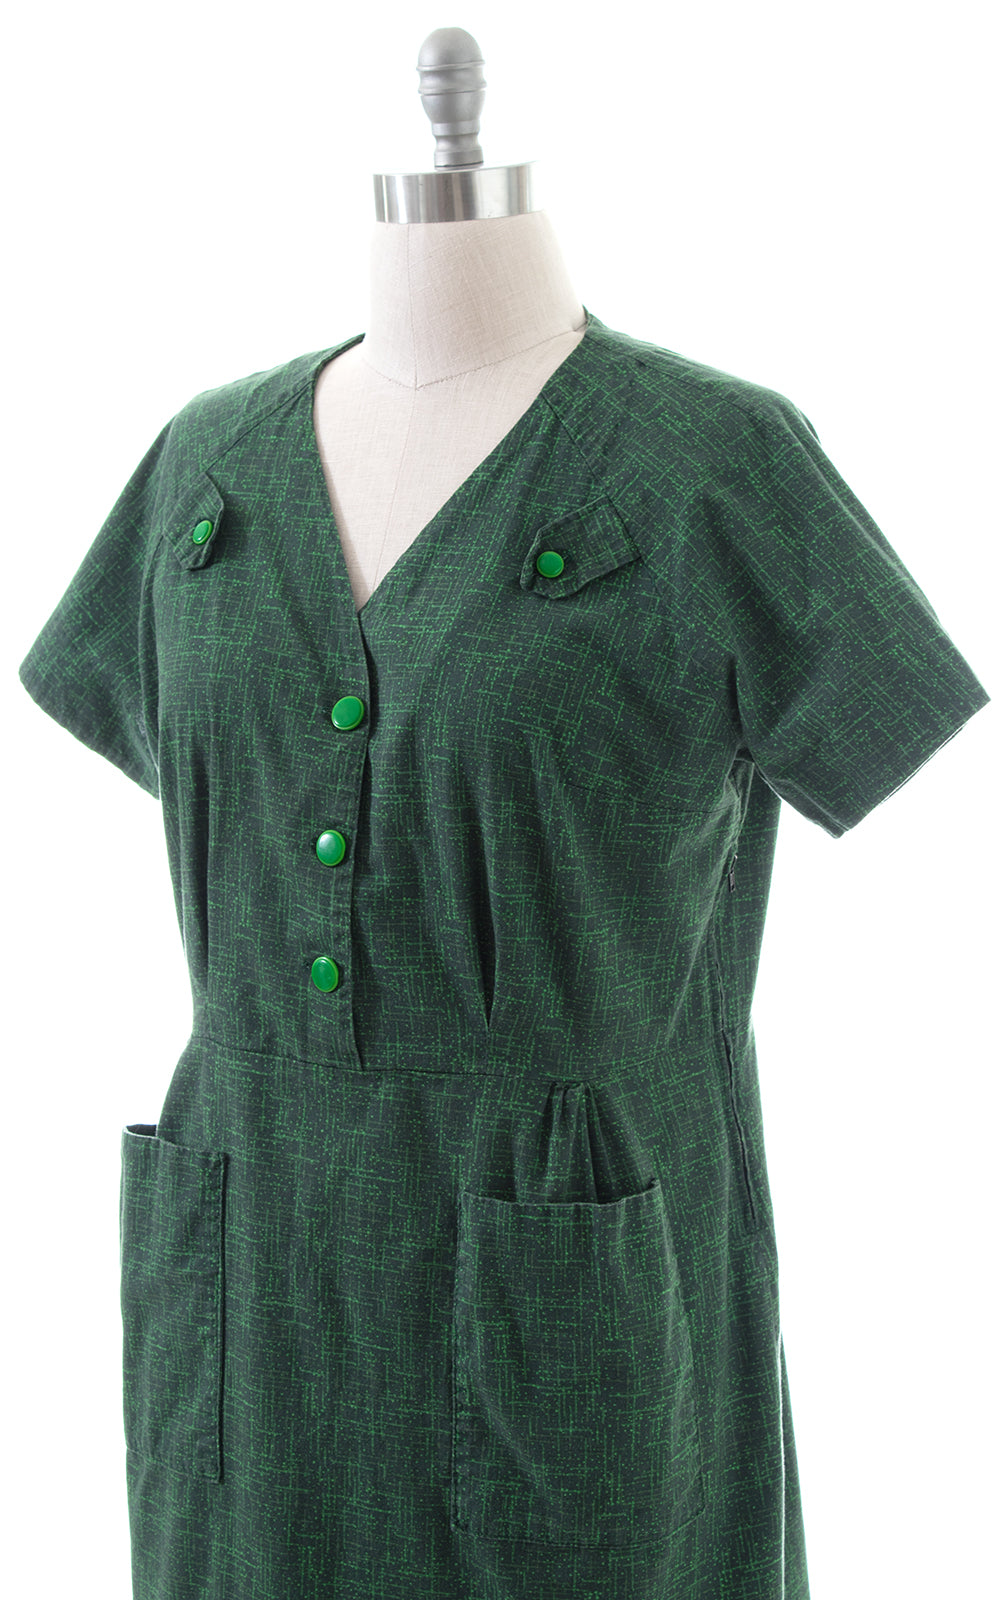 1960s Atomic Green Shirtwaist Wiggle Dress with Pockets